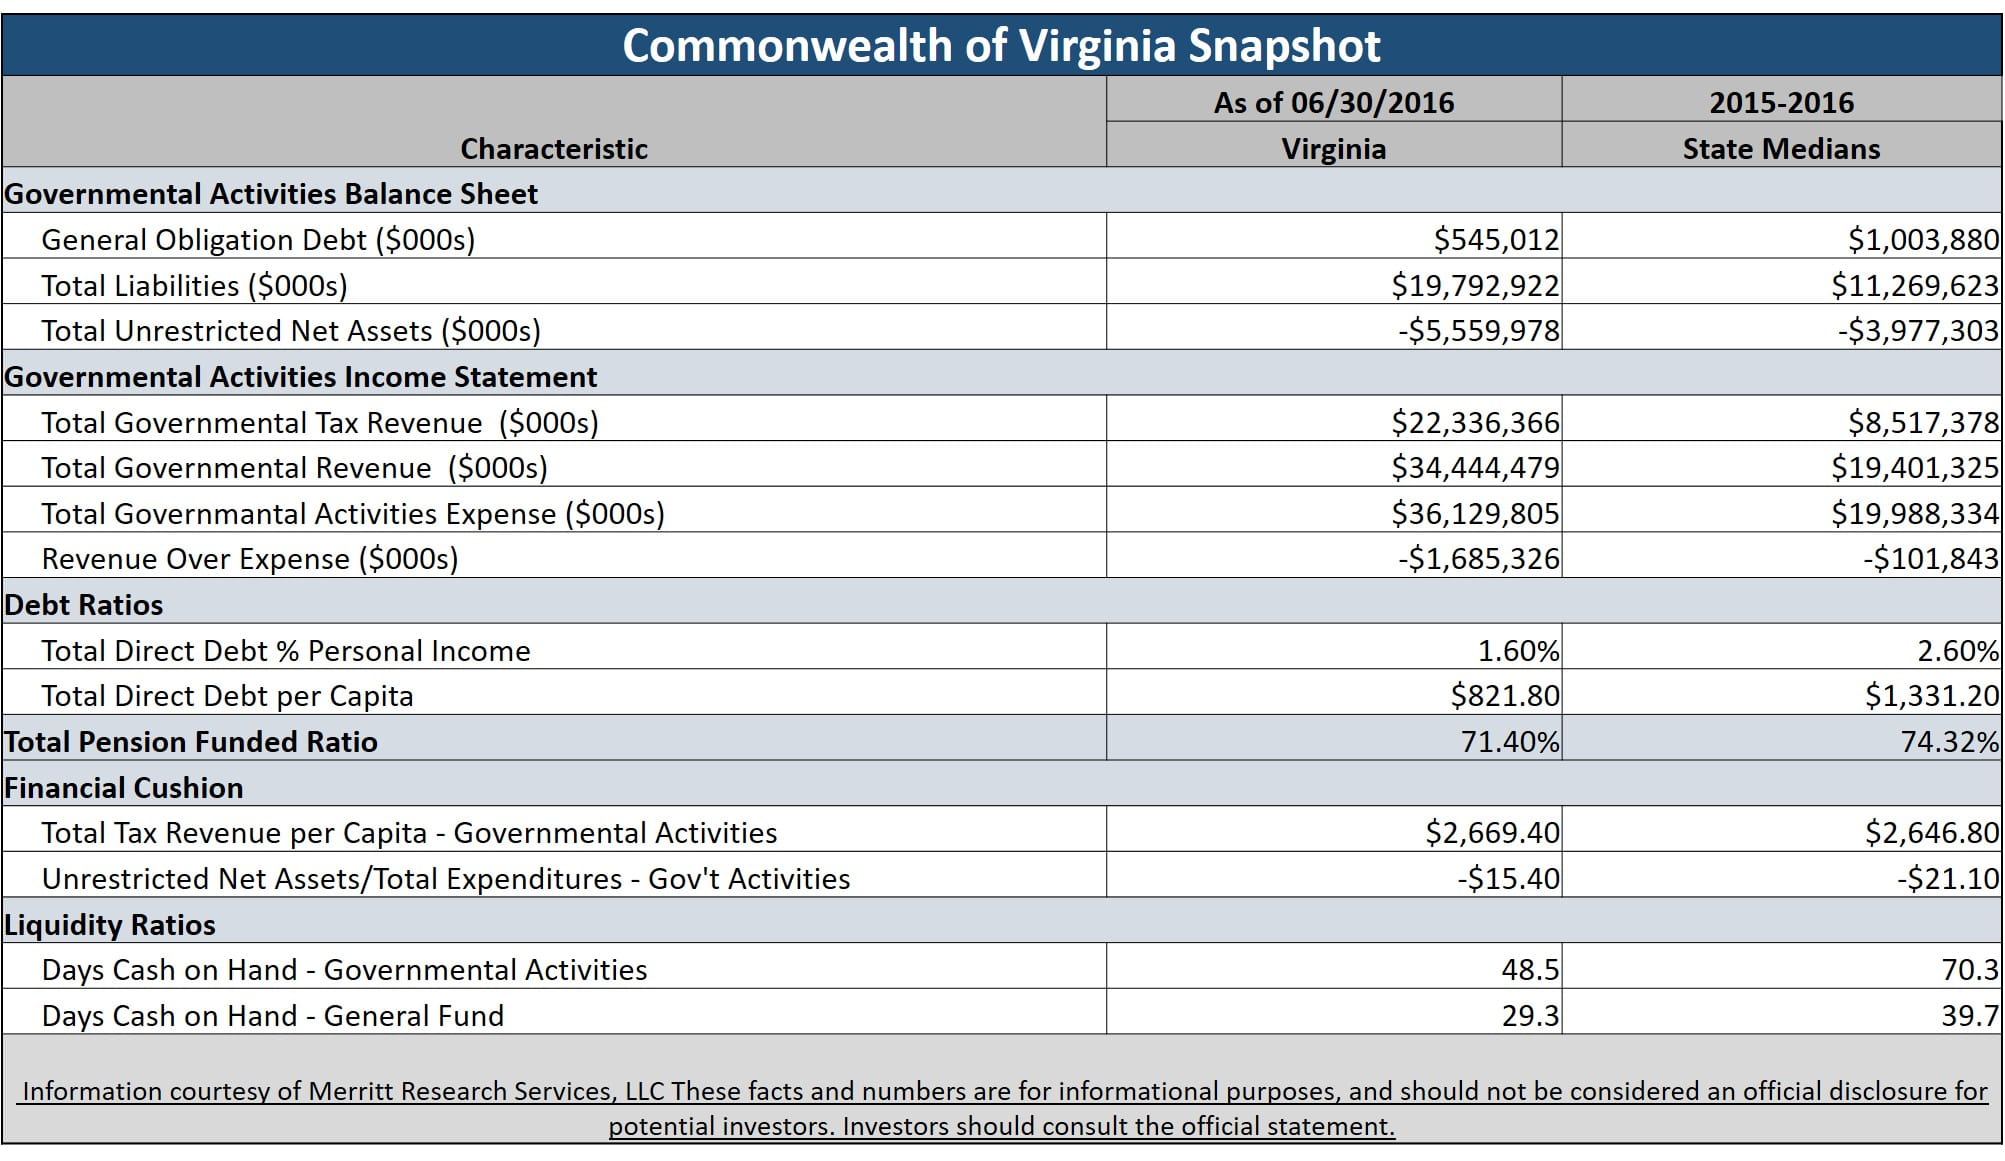 Municipal Bond Featured Snapshot - Commonwealth of Virginia